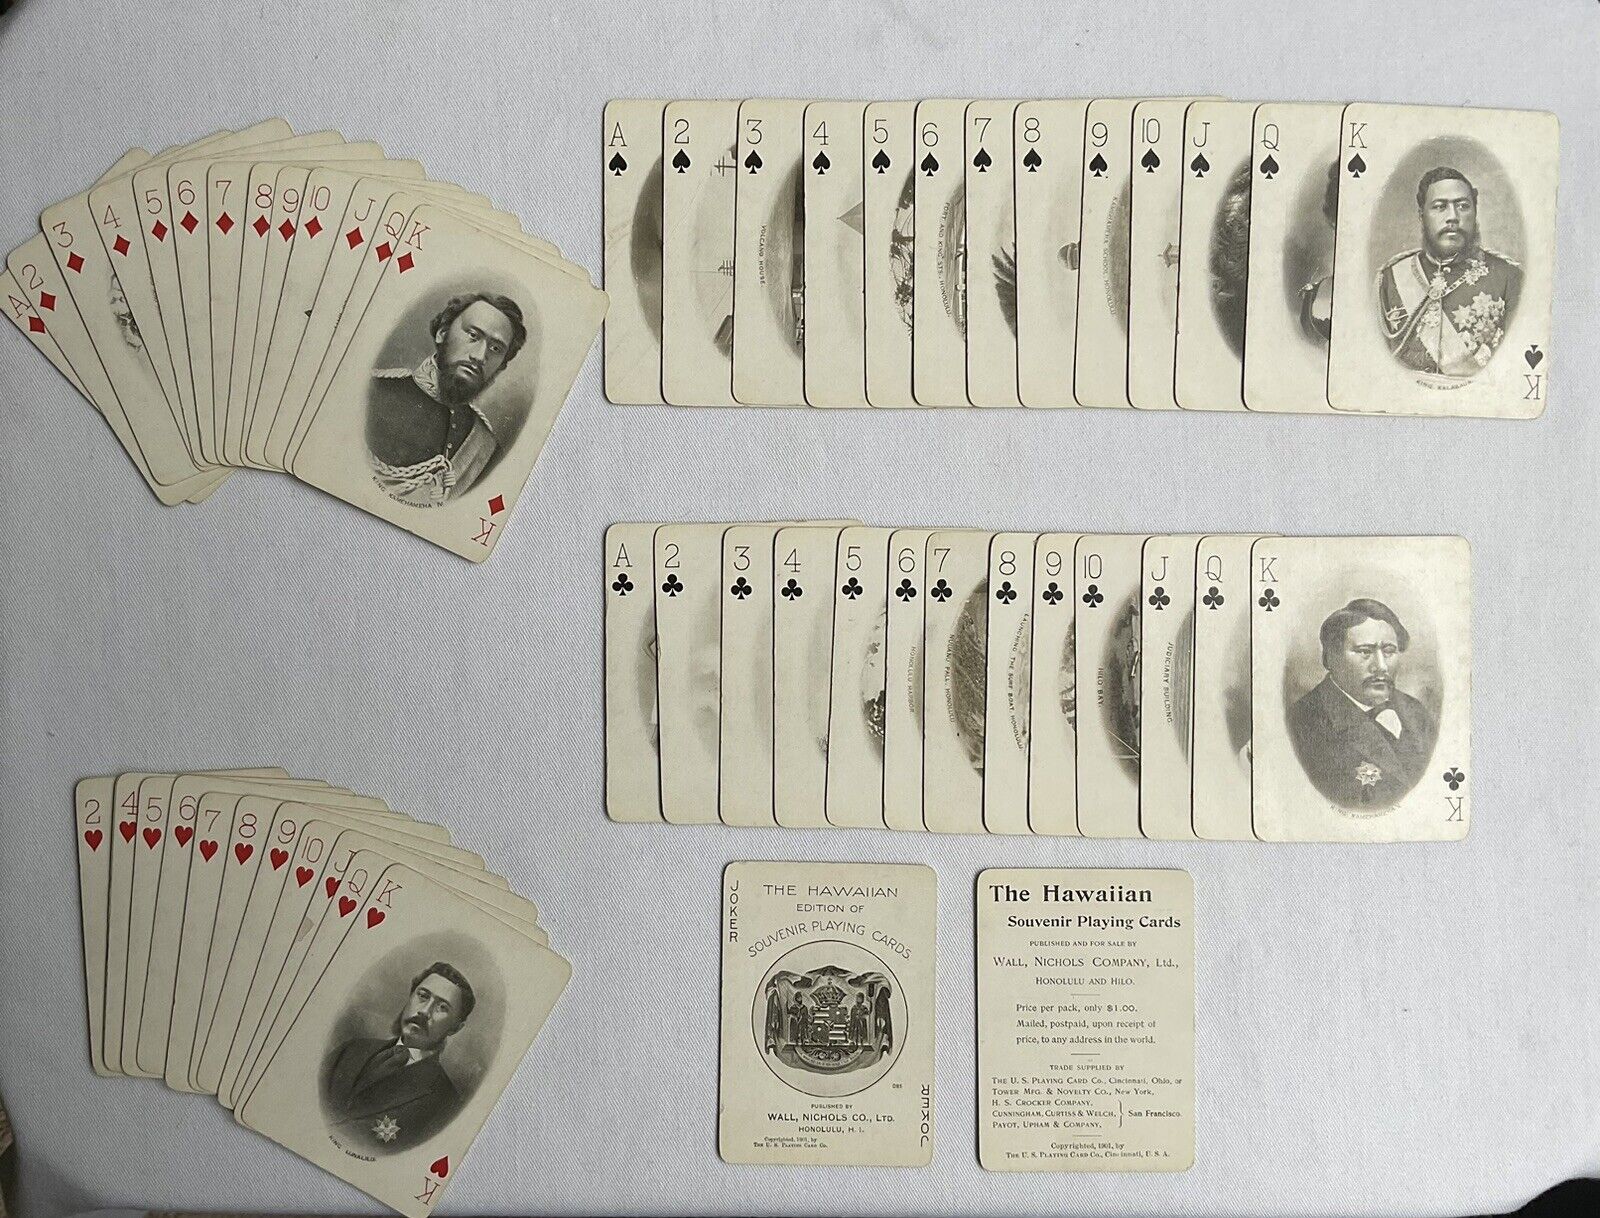 Wall Nichols Souvenir Hawaiian Playing Cards Full Deck. Copyright 1901